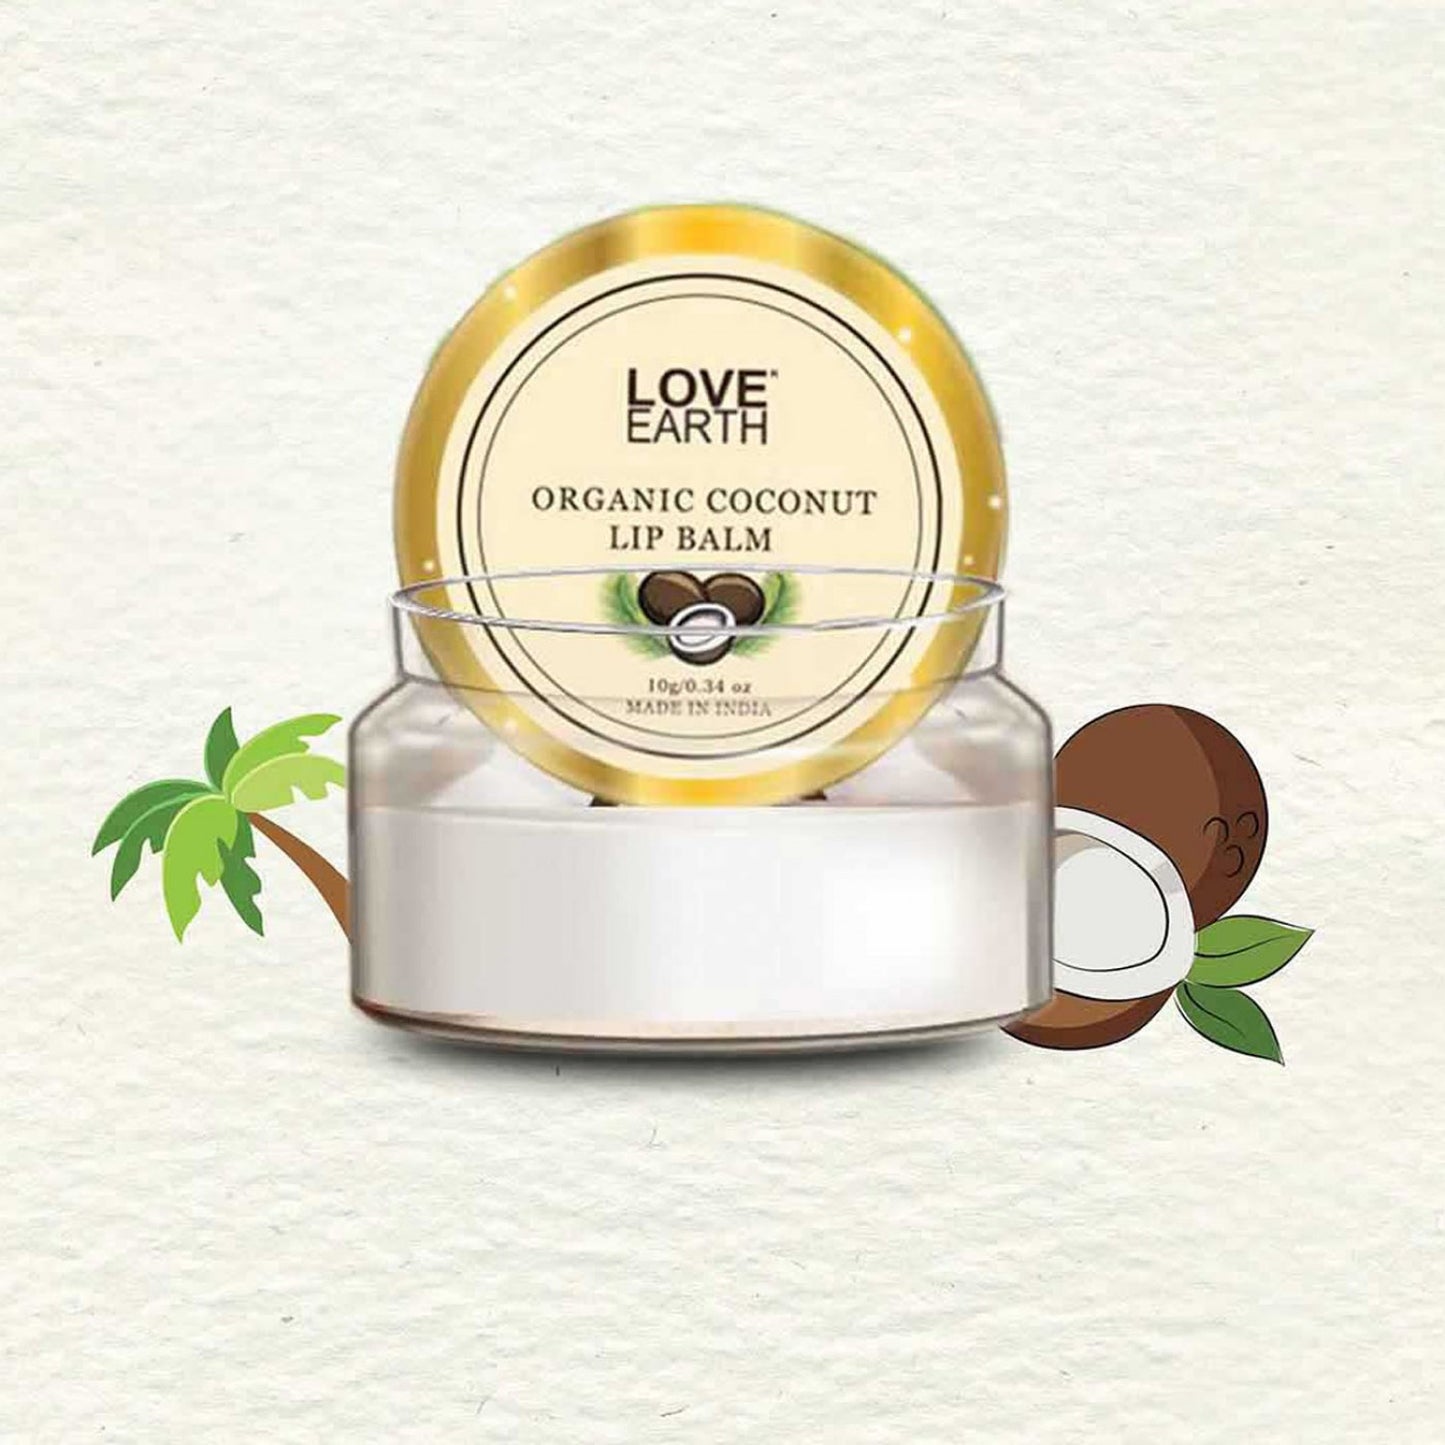 Love Earth Organic Coconut Lip Balm - 10g